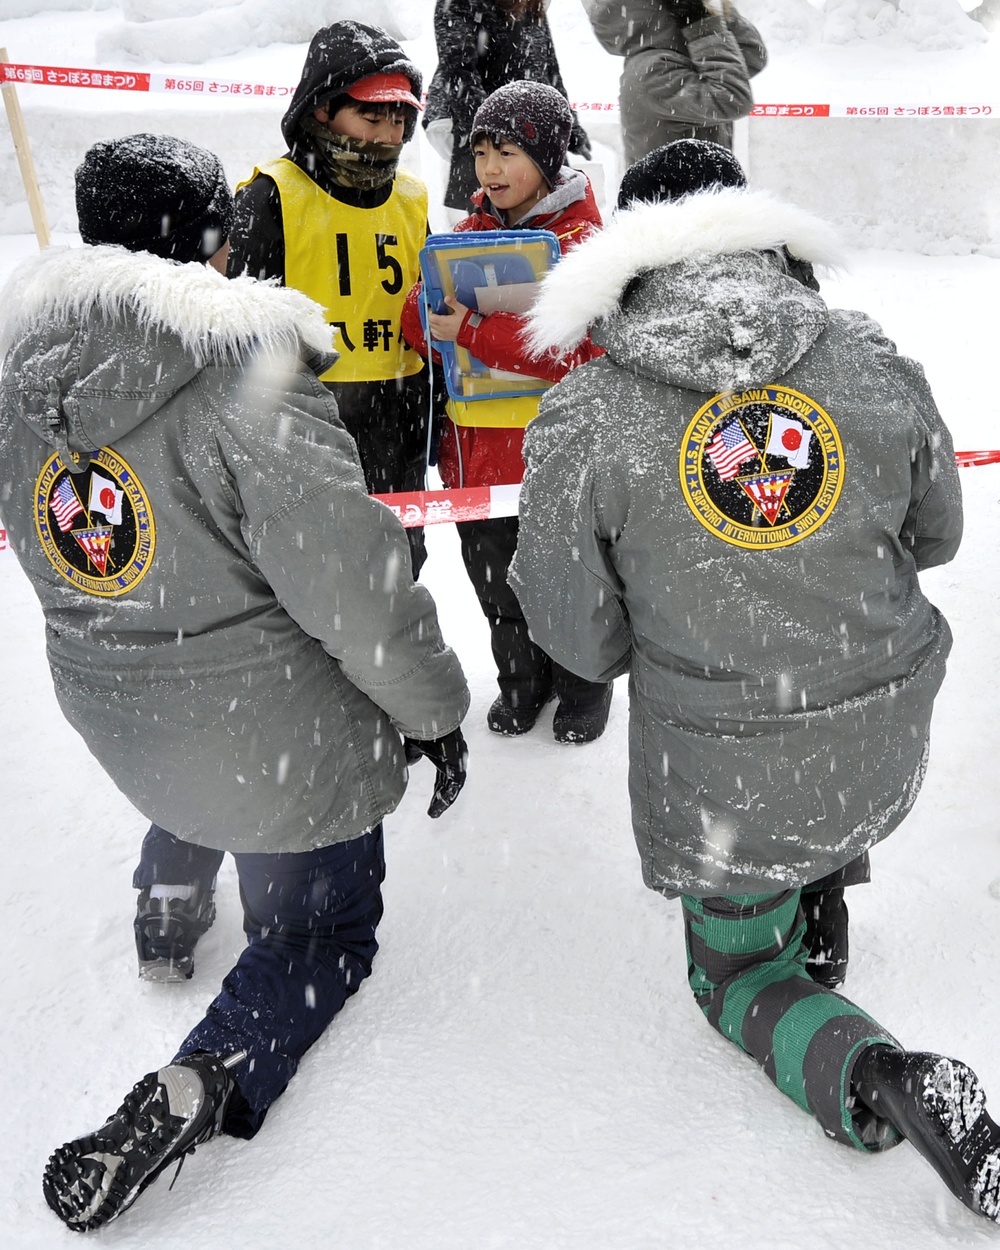 2014 Navy Misawa Snow Team at 65th Annual Sapporo Snow Fest